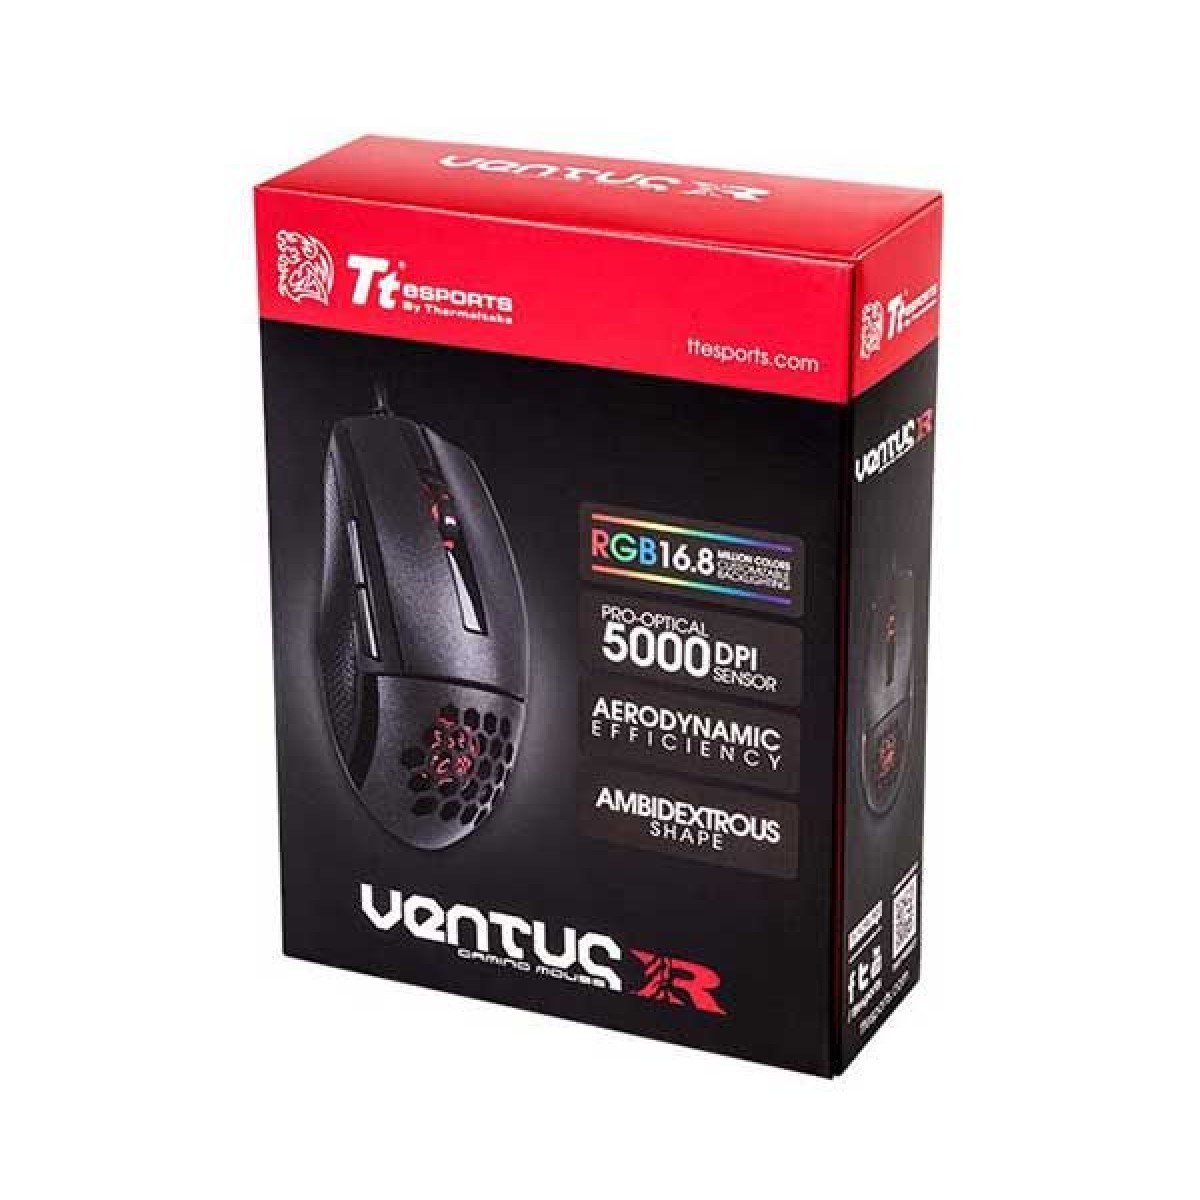 Mouse Gamer Thermaltake eSports Ventus R, 5000 DPI, RGB, 5 Botões, Black, MO-VER-WDOOBK-01